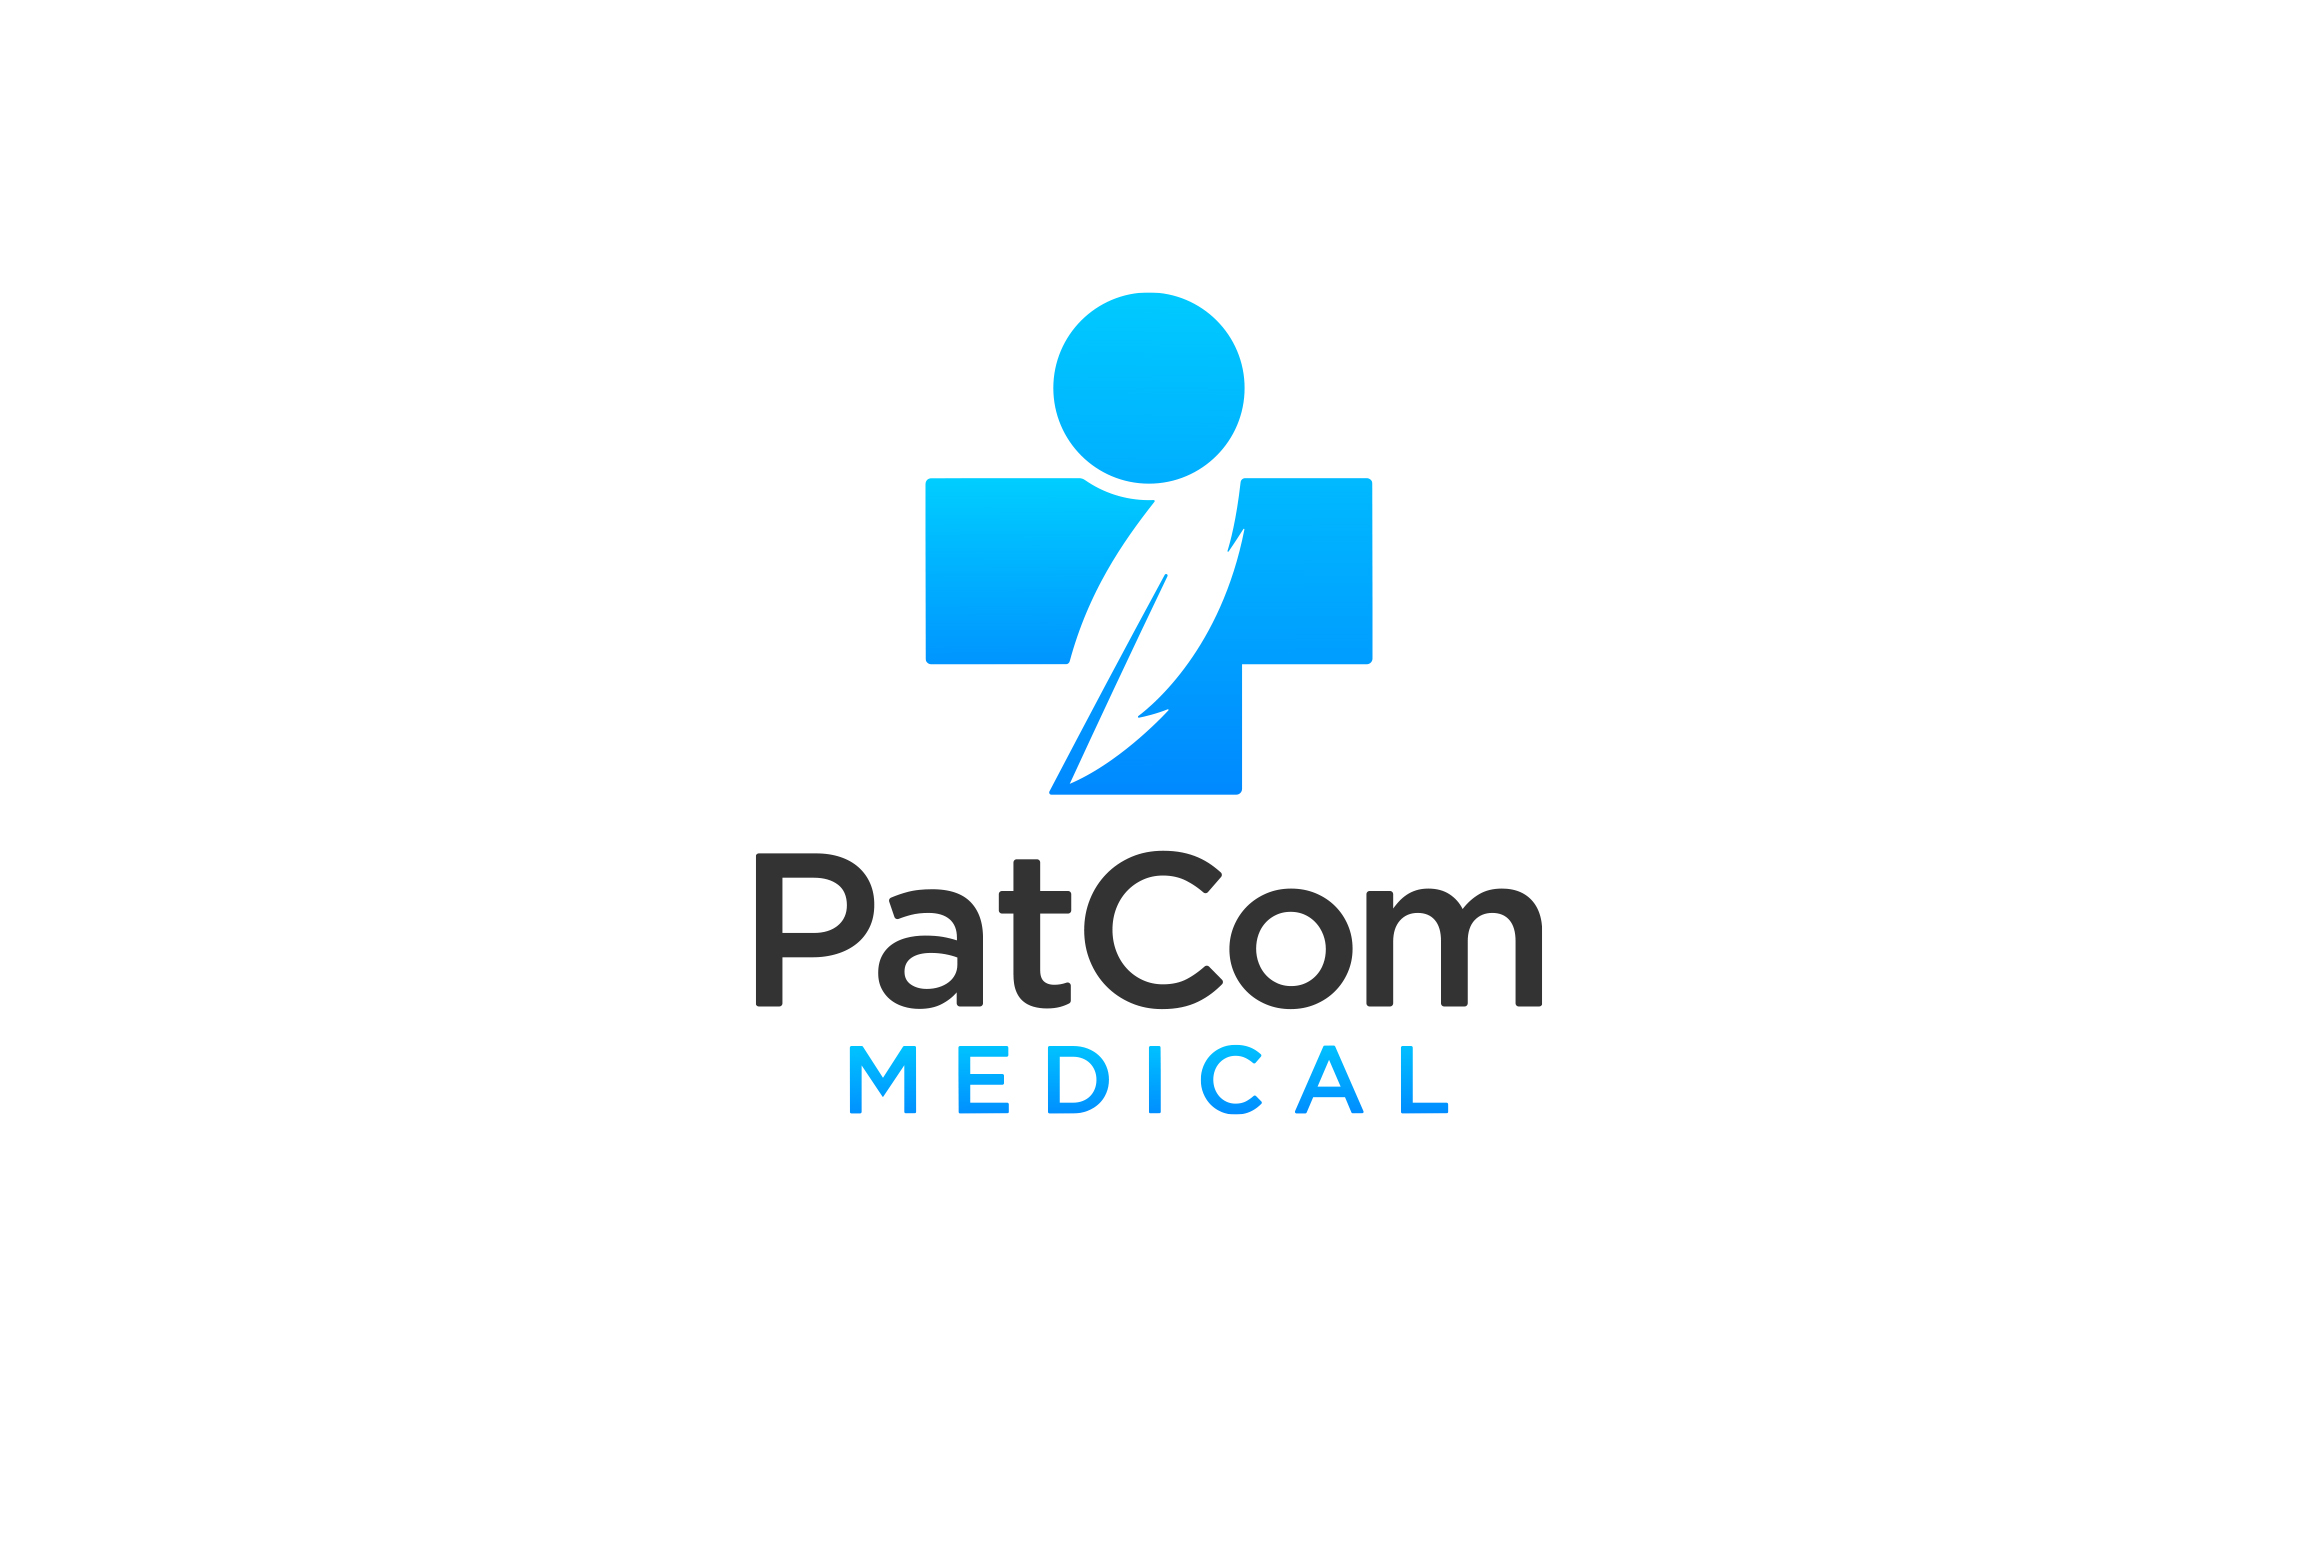 PatCom Medical Inc